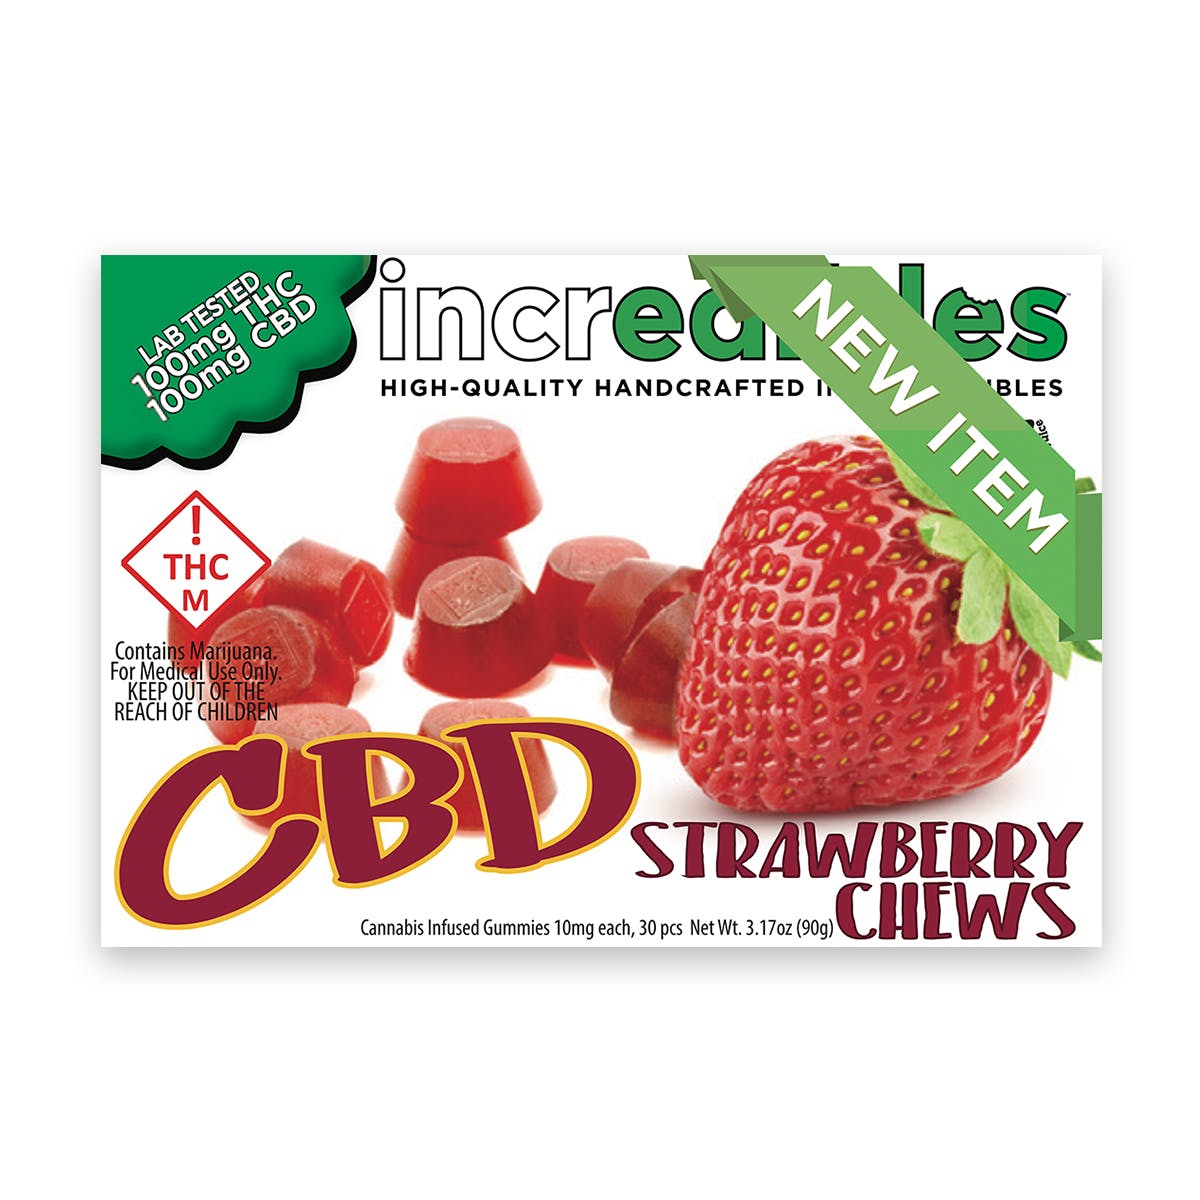 edible-incredibles-cbd-strawberry-chews-2c-100mg-11-thccbd-rec